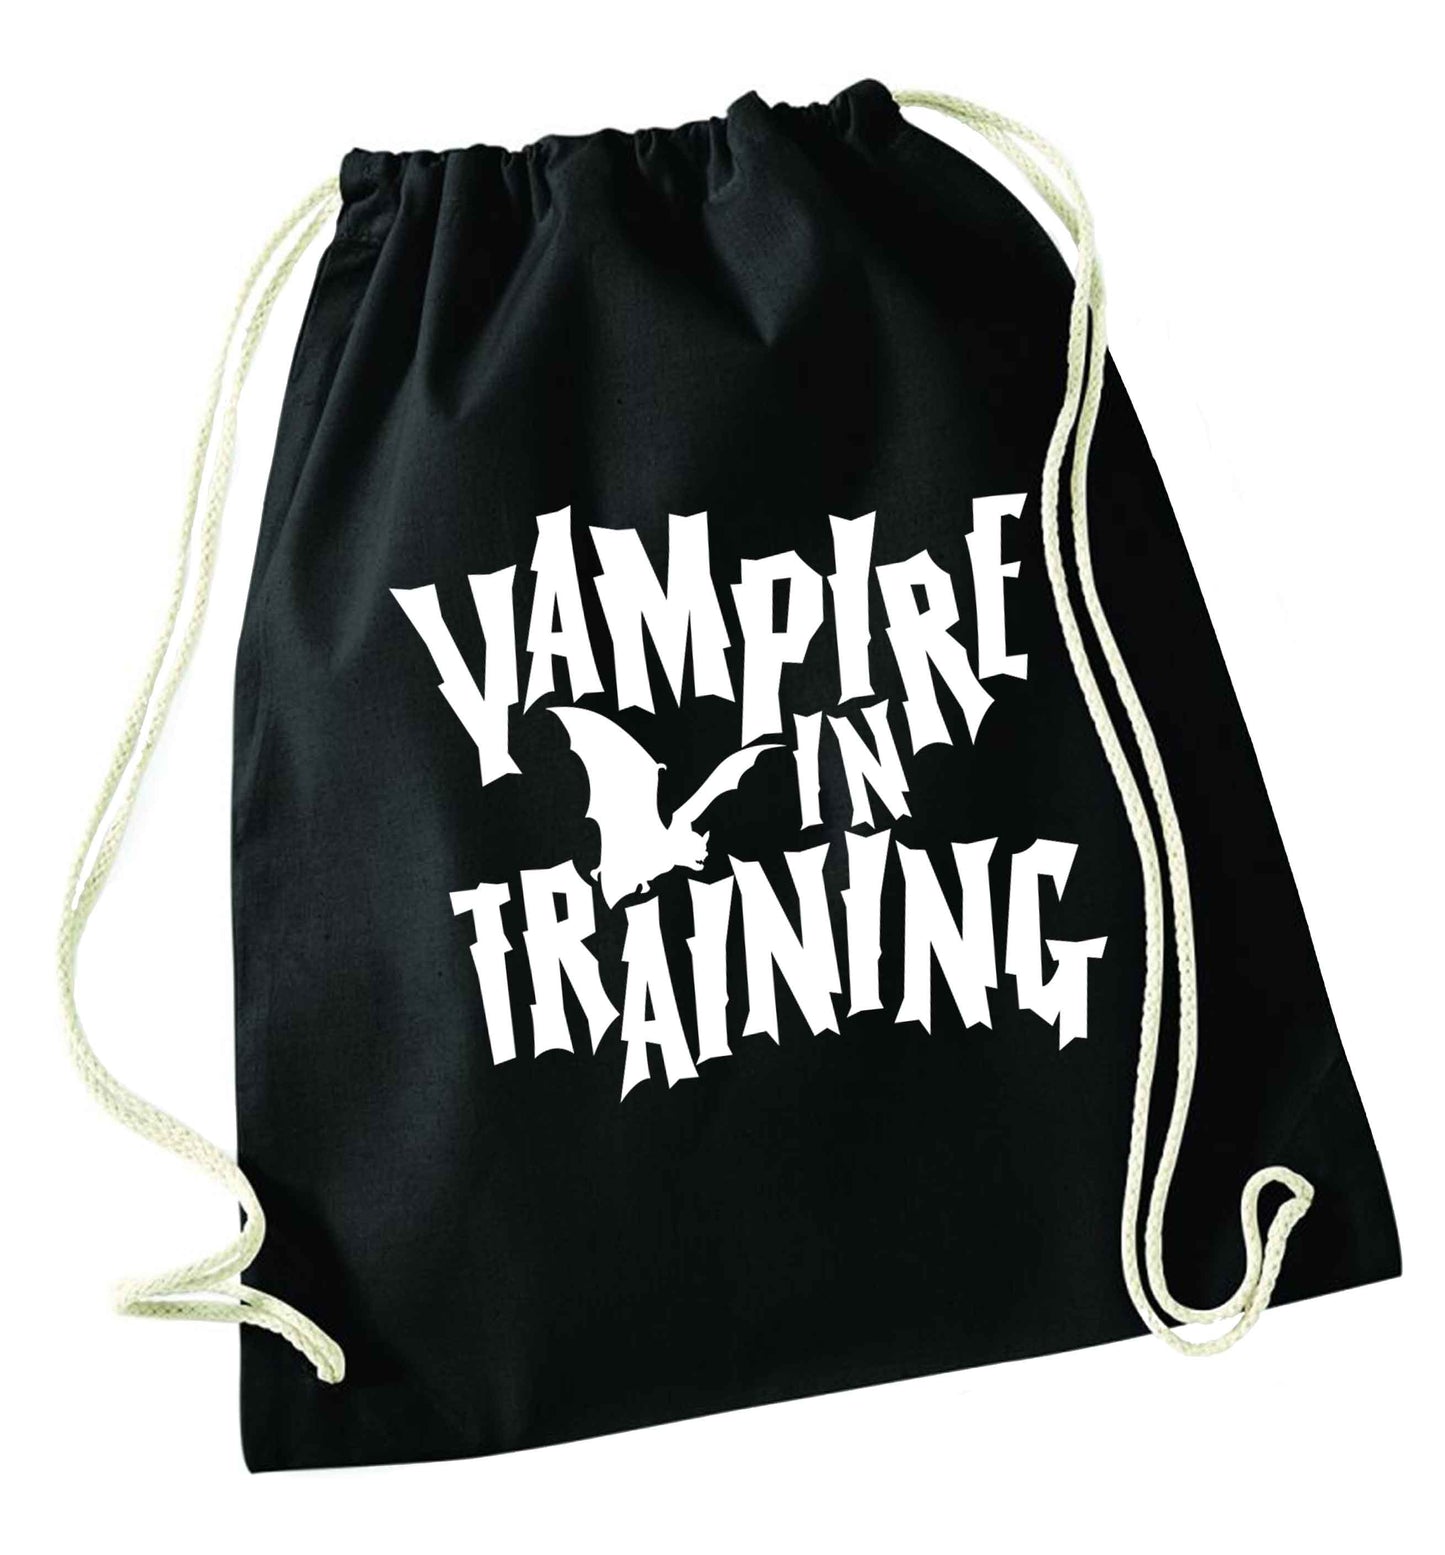 Vampire in training black drawstring bag